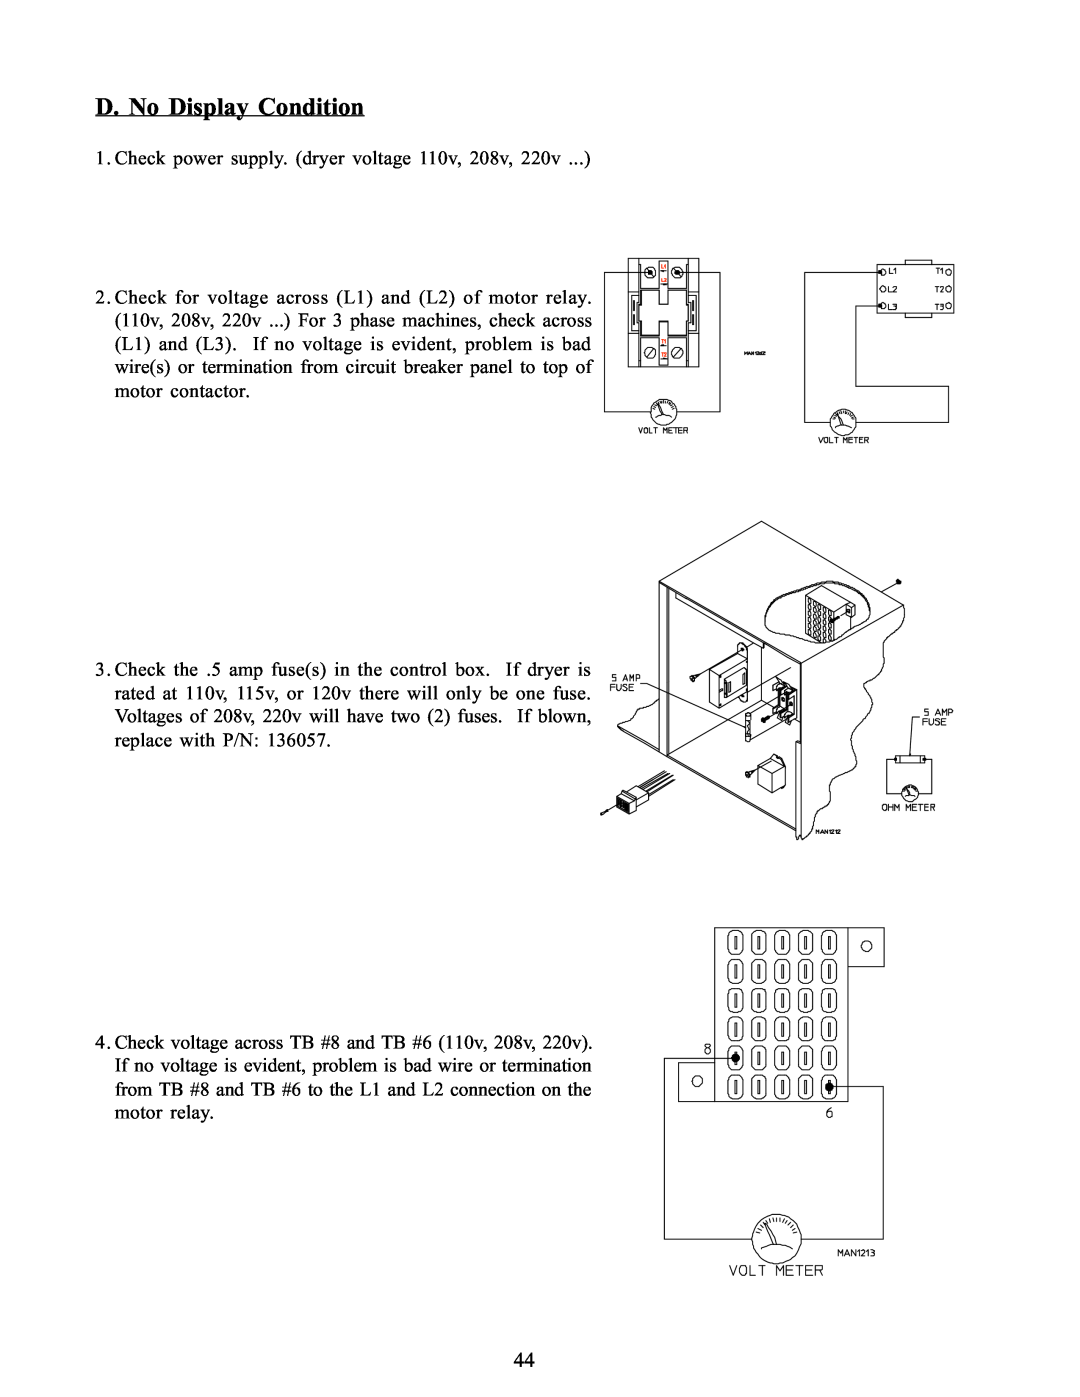 American Dryer Corp WDA-385 service manual D. No Display Condition 